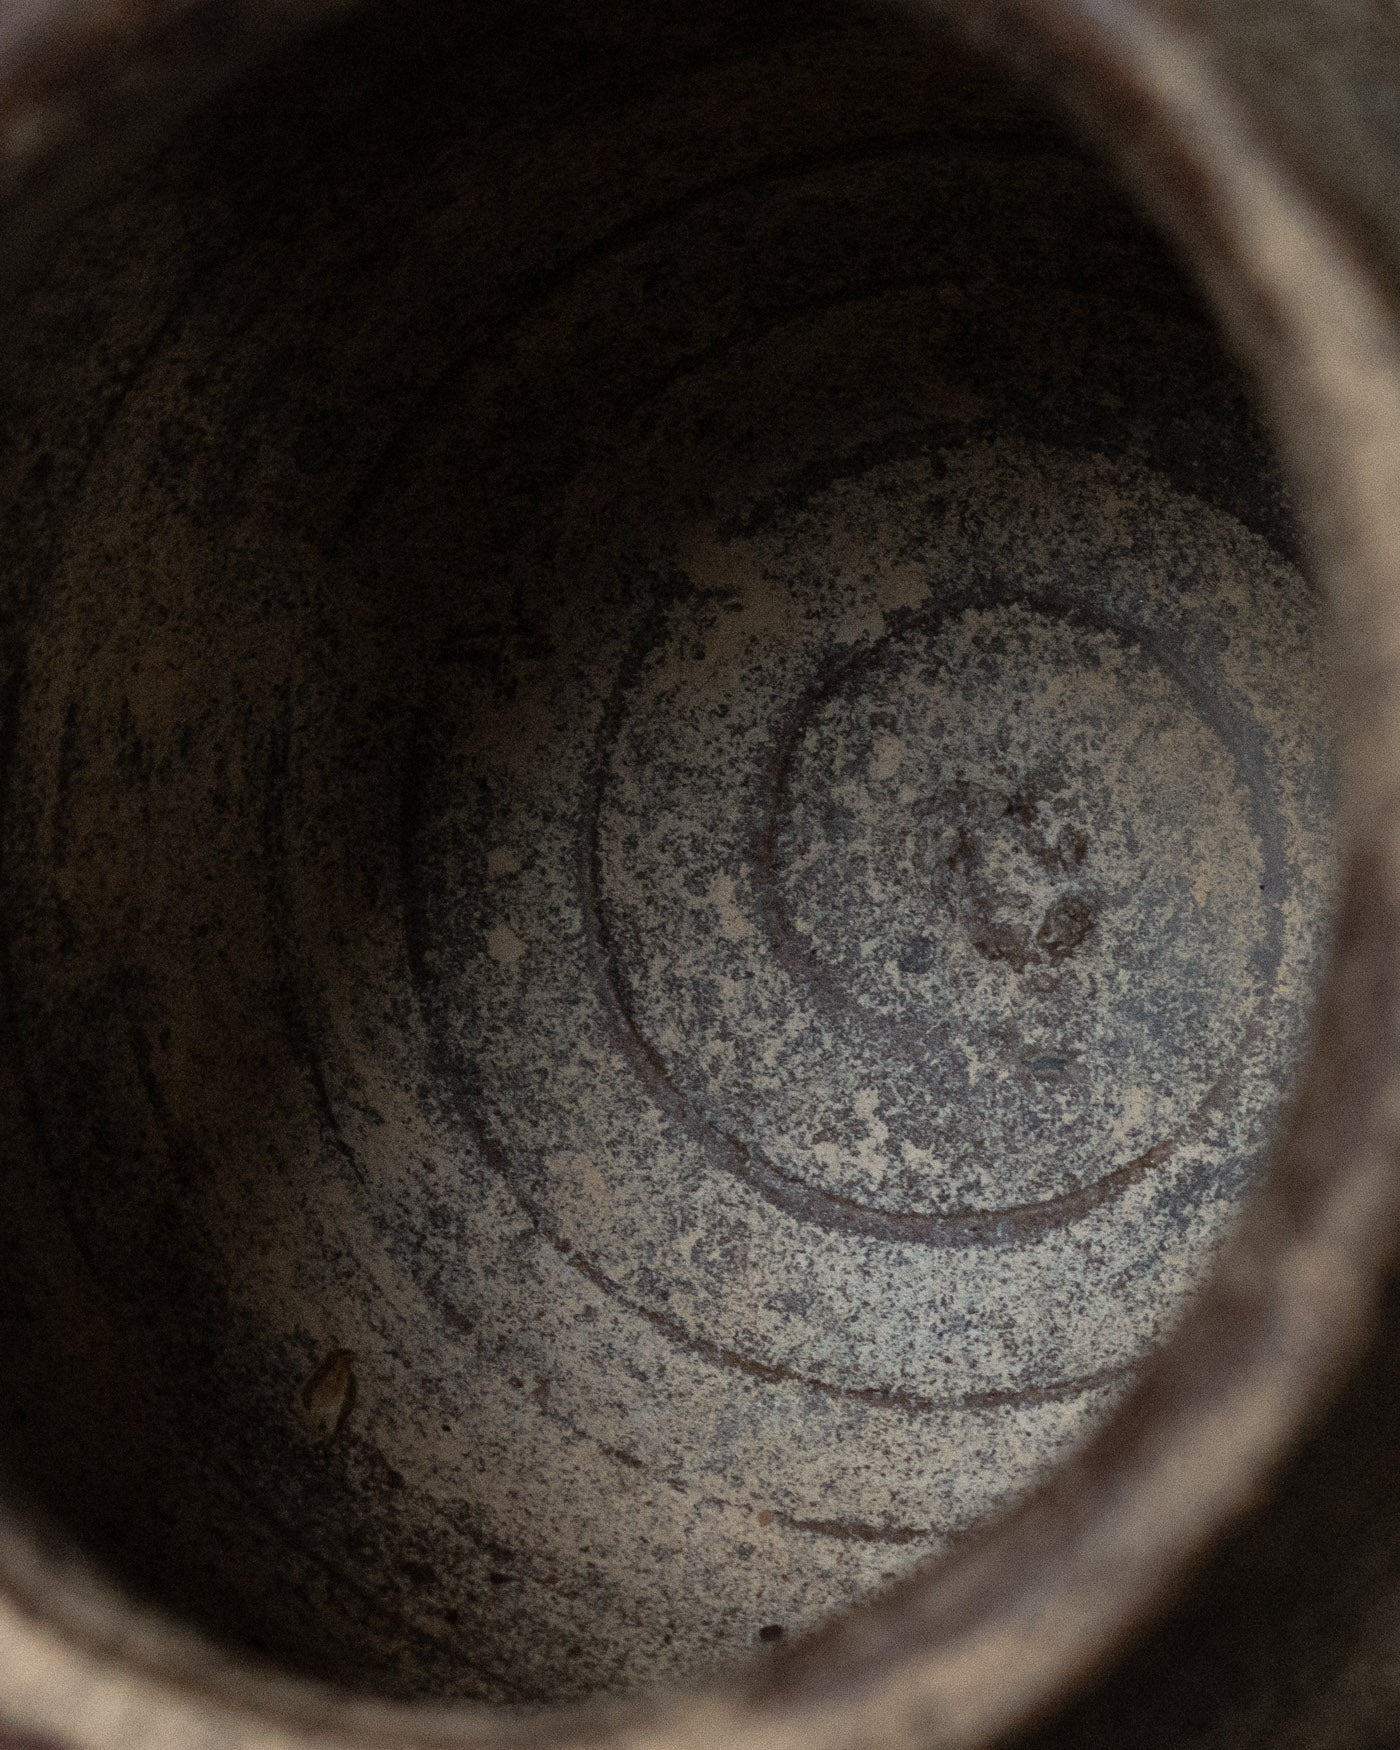 柴染弦紋陶罐 Fushizome Pottery Jar